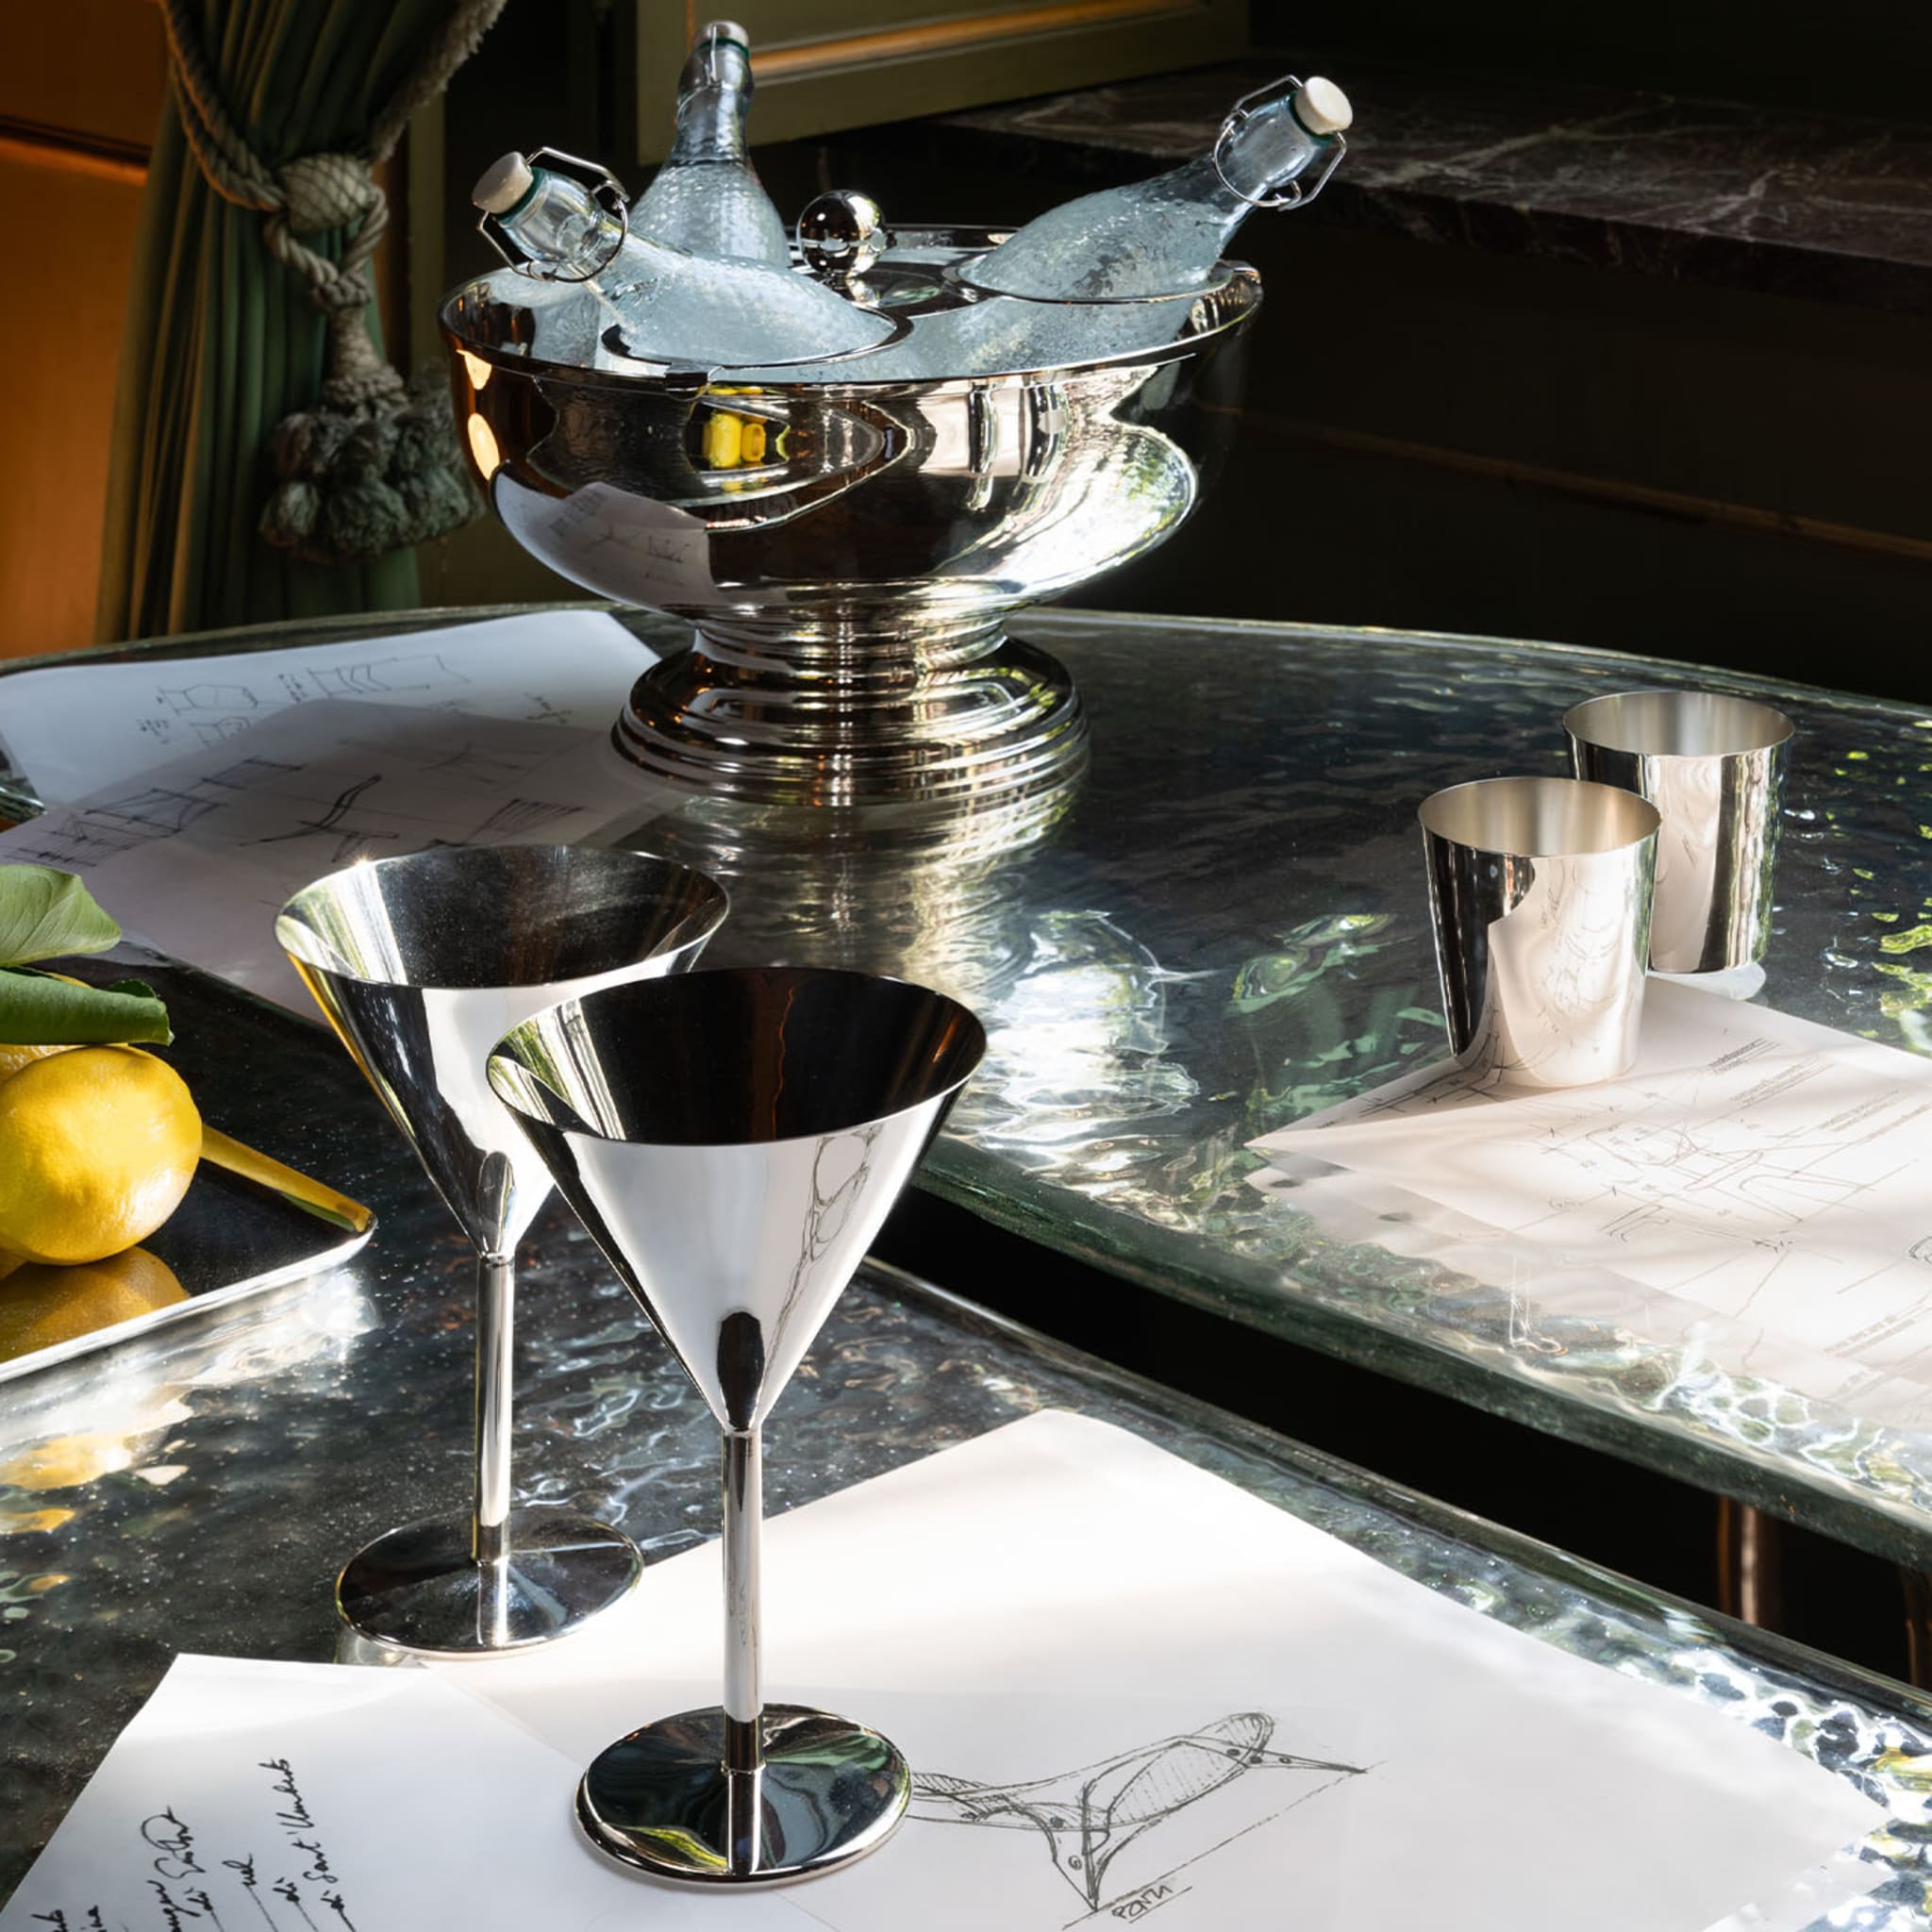 Millenium Set of Champagne Flute and Martini Glass by Lella and Massimo Vignelli - Alternative view 1